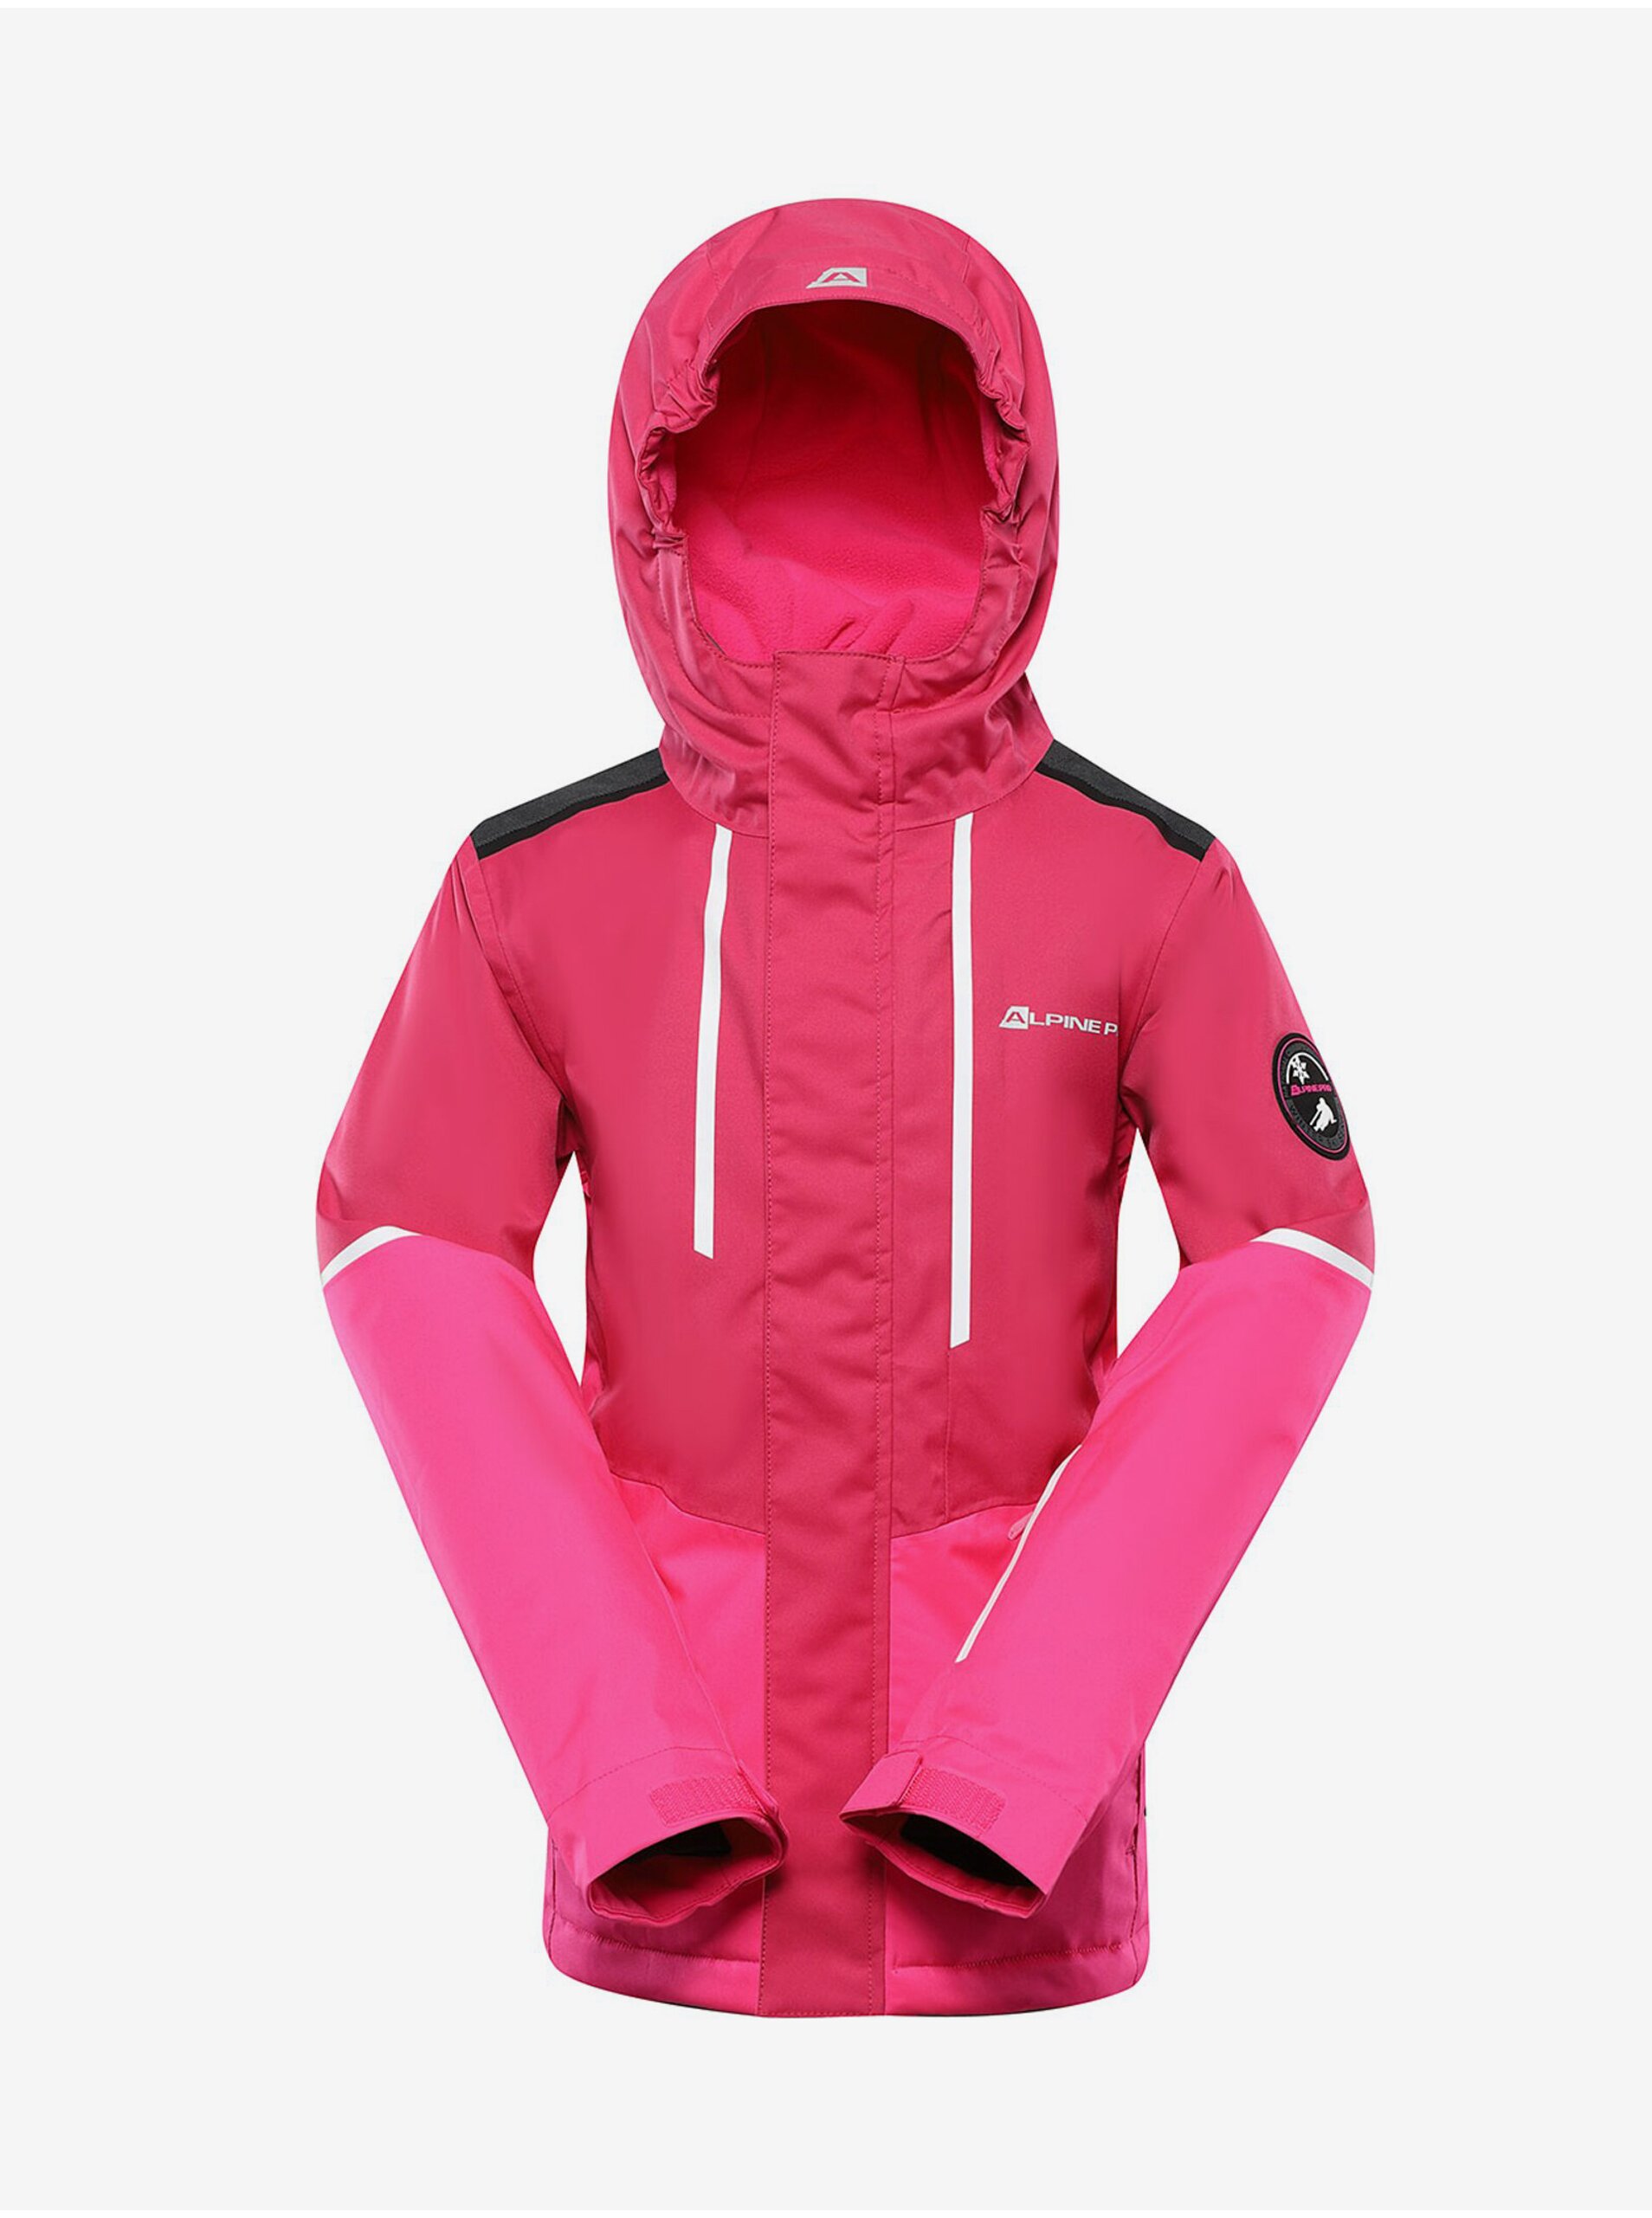 Lacno Tmavo ružová dievčenská lyžiarska bunda s membránou PTX ALPINE PRO Zaribo